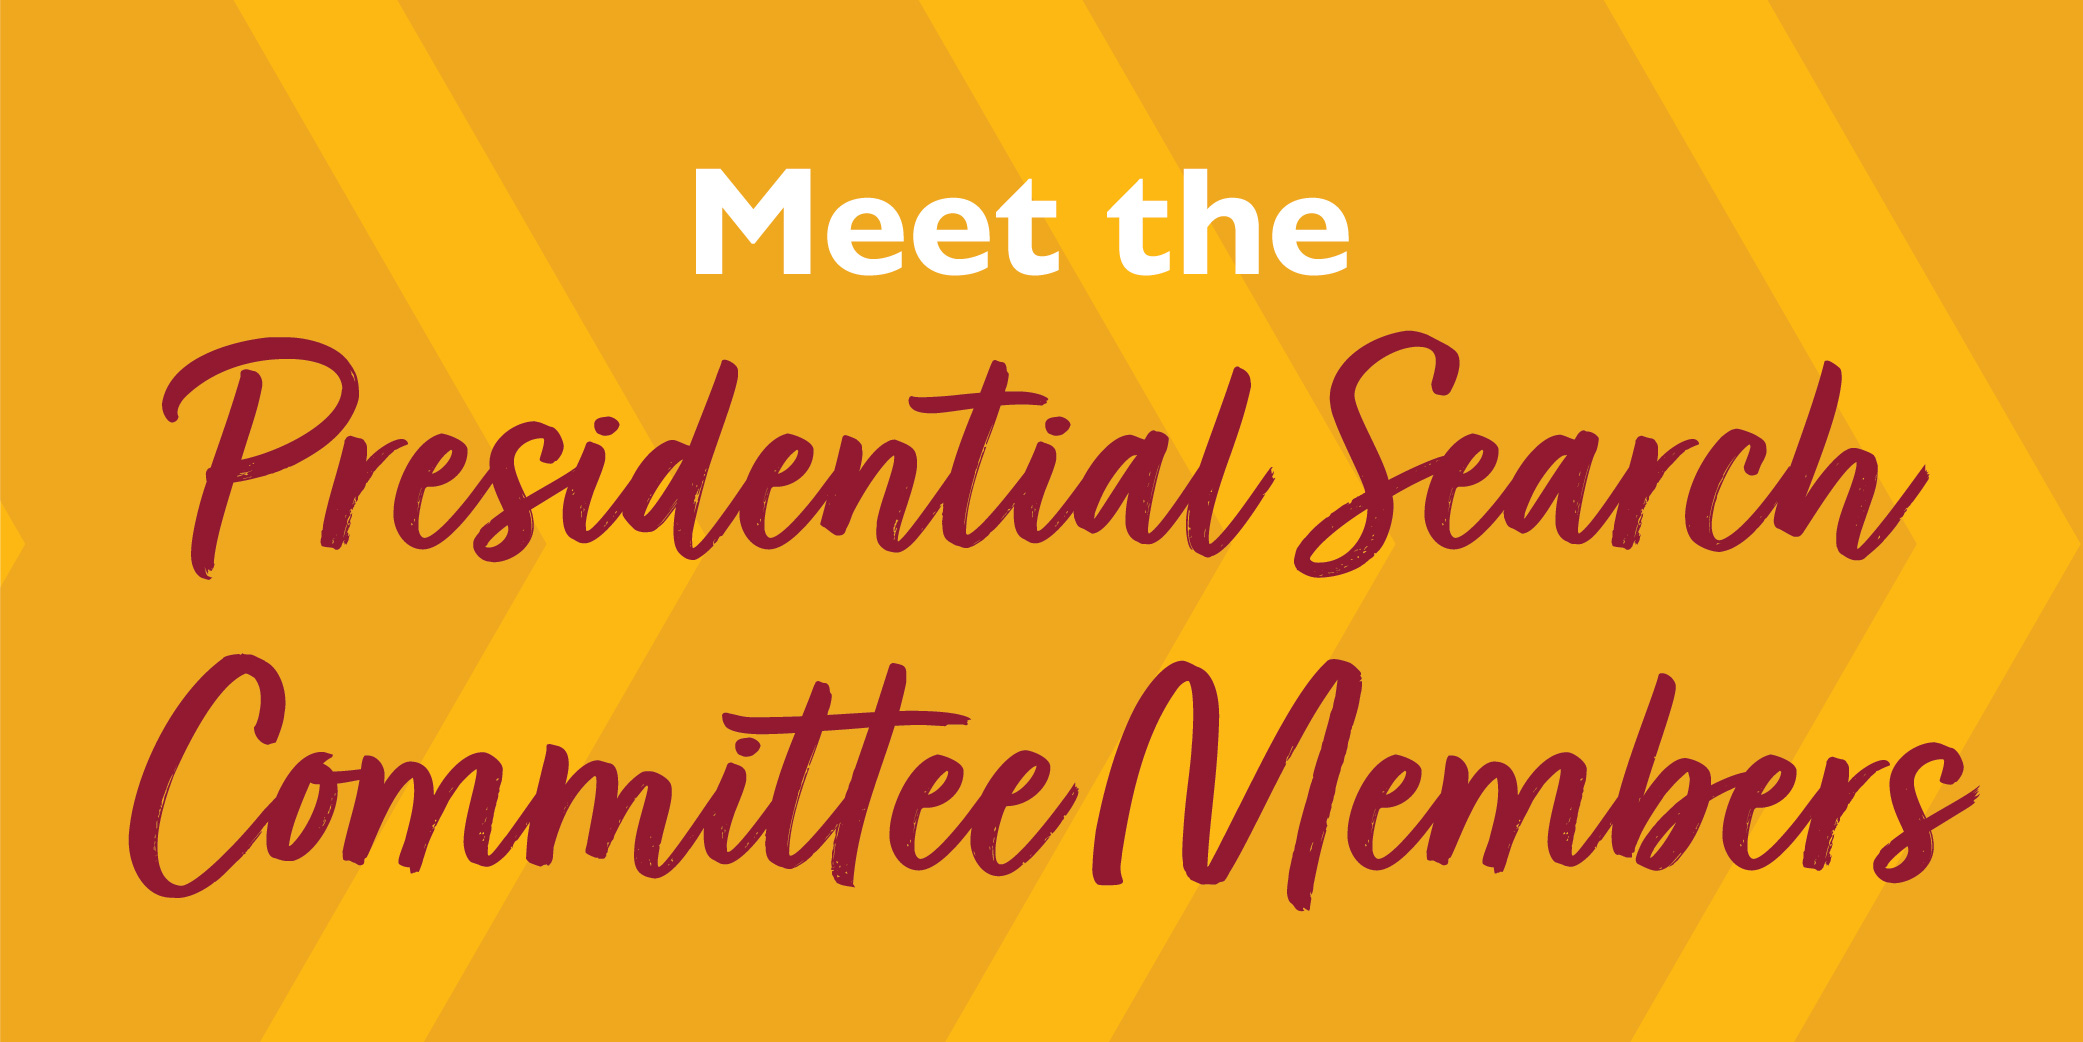 Meet the presidential search committee members